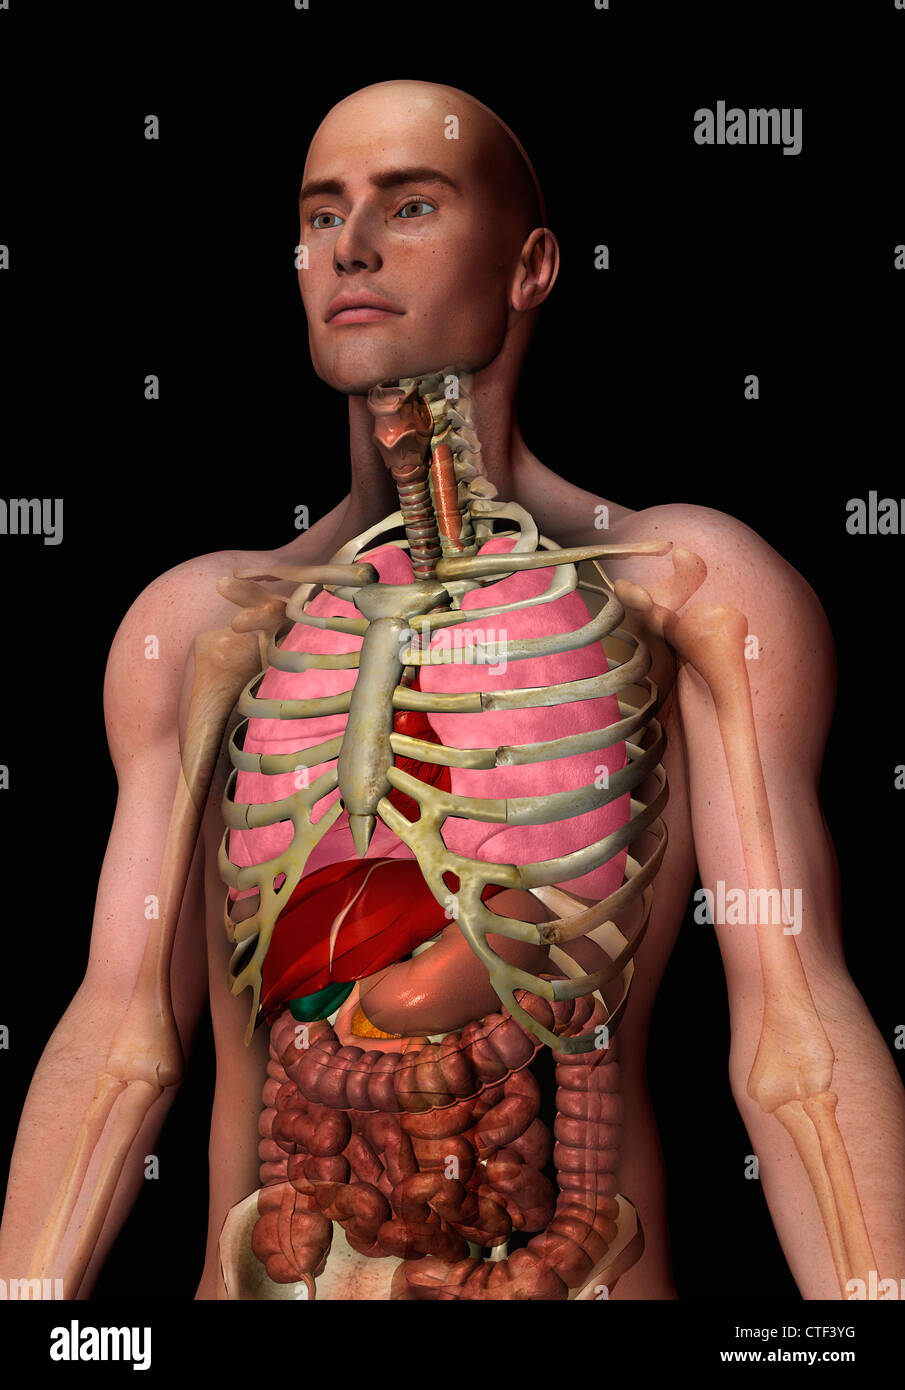 Generati digitalmente immagine interna di organi umani Foto Stock